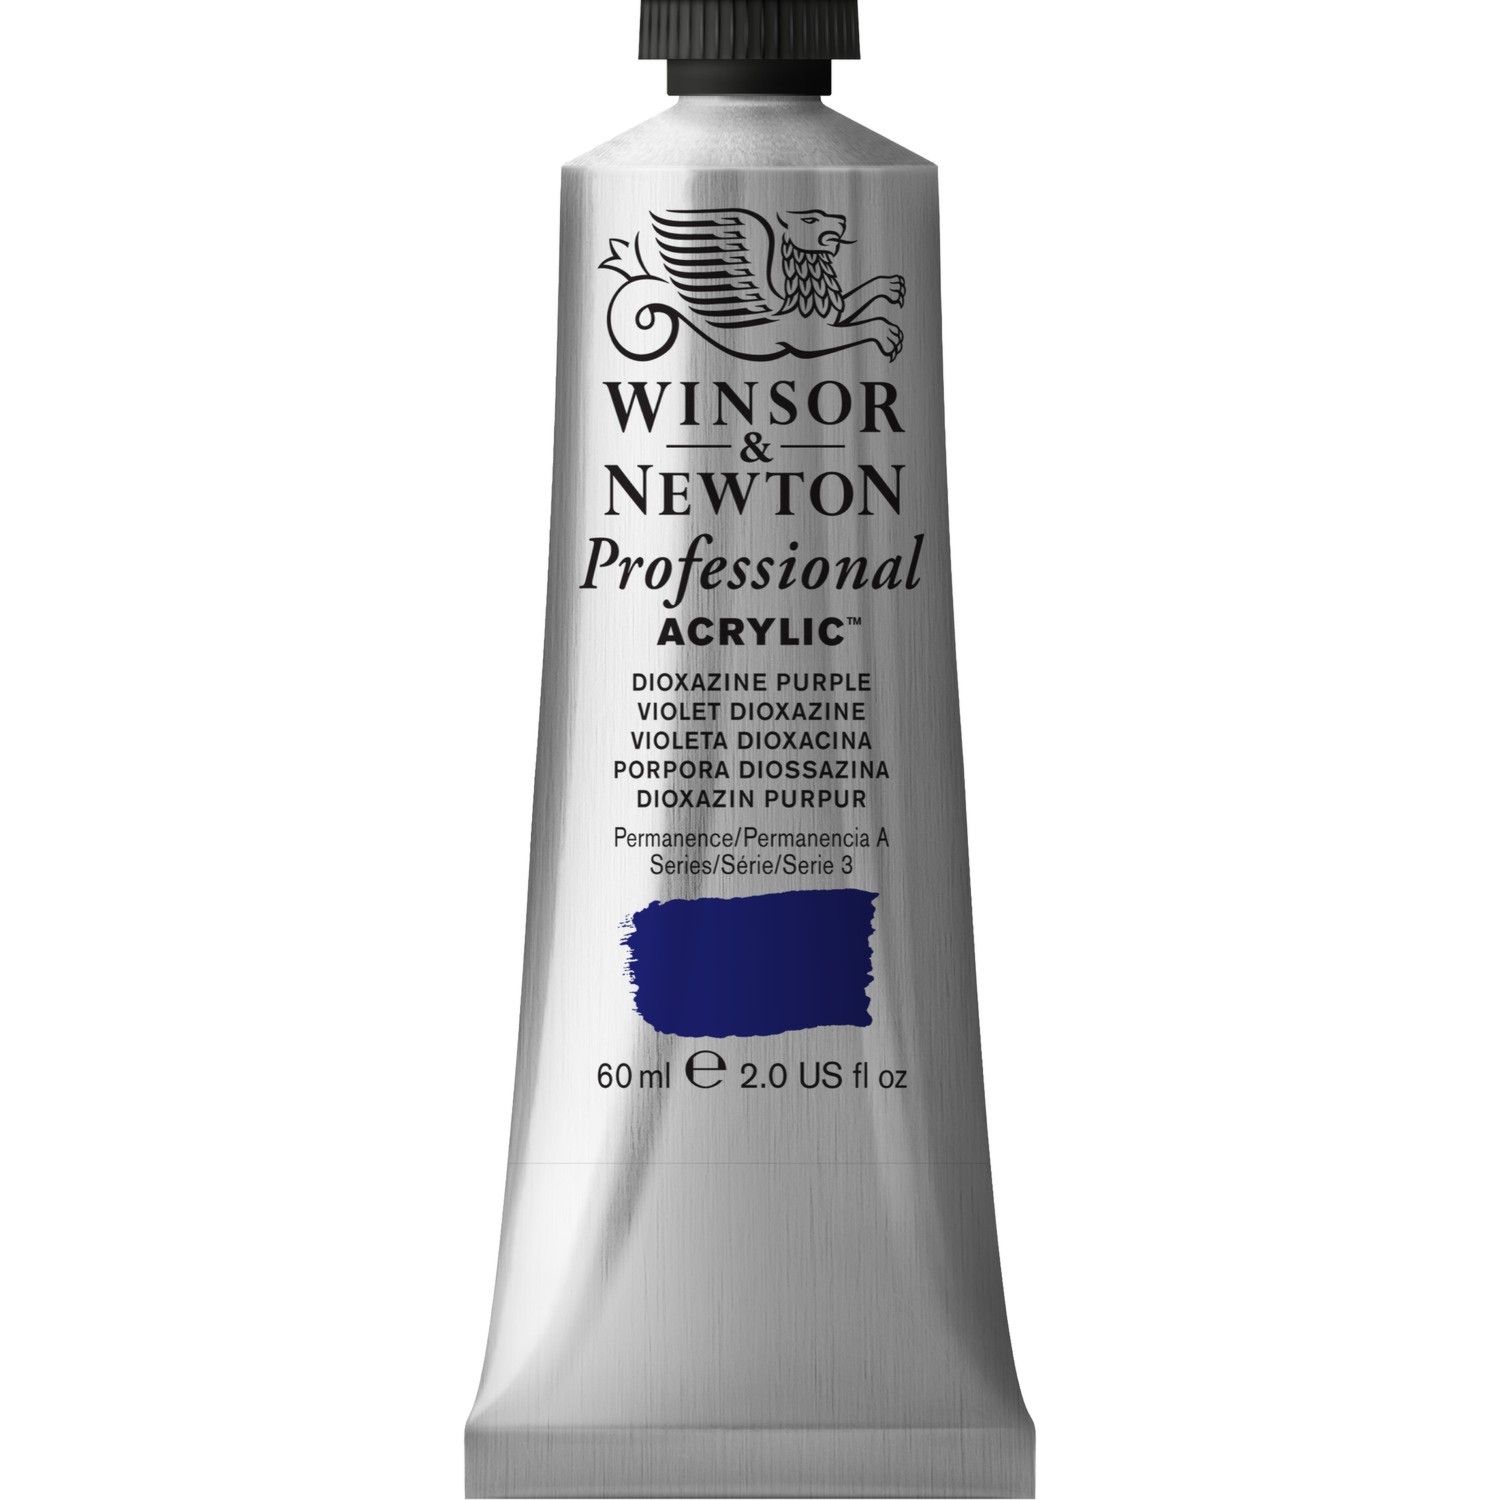 Winsor and Newton 60ml Professional Acrylic Paint - Dioxazine Purple Image 1